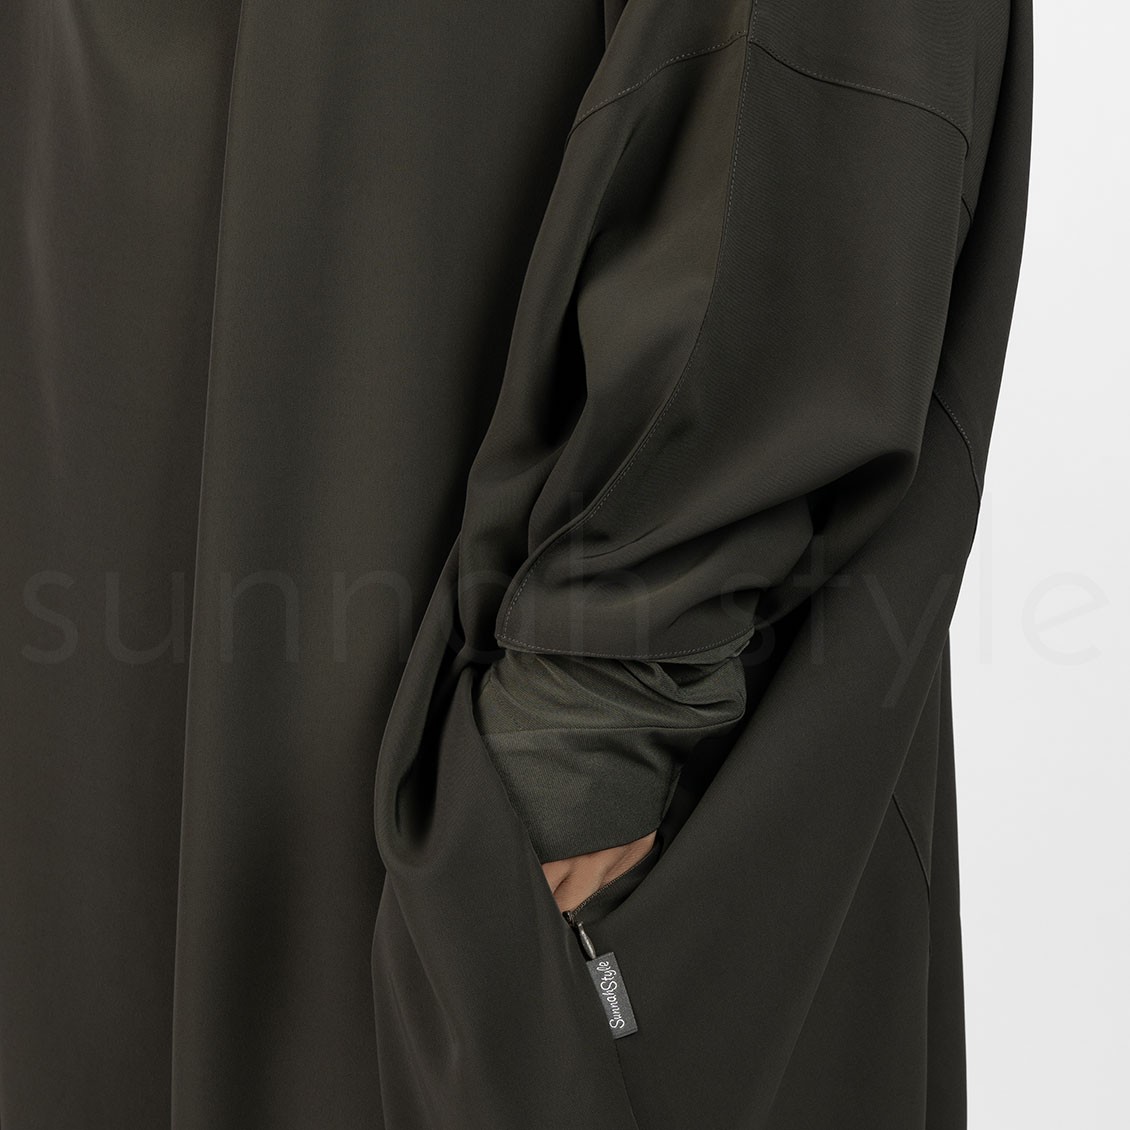 Sunnah Style Essentials Full Length Jilbab Midnight Green